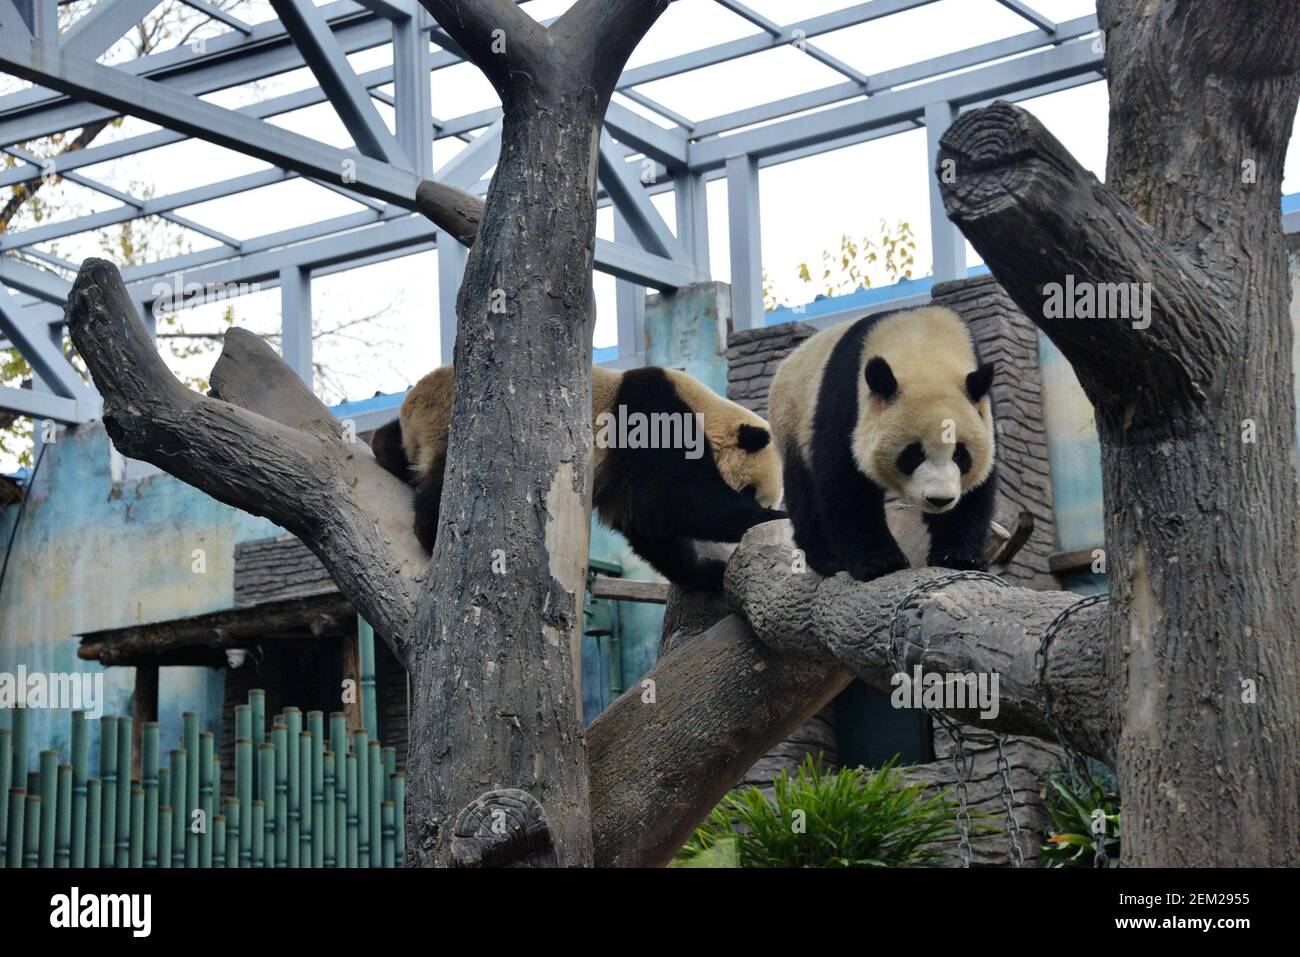 Beijing, CHINA-Some cute giant pandas pose in the panda enclosure ...